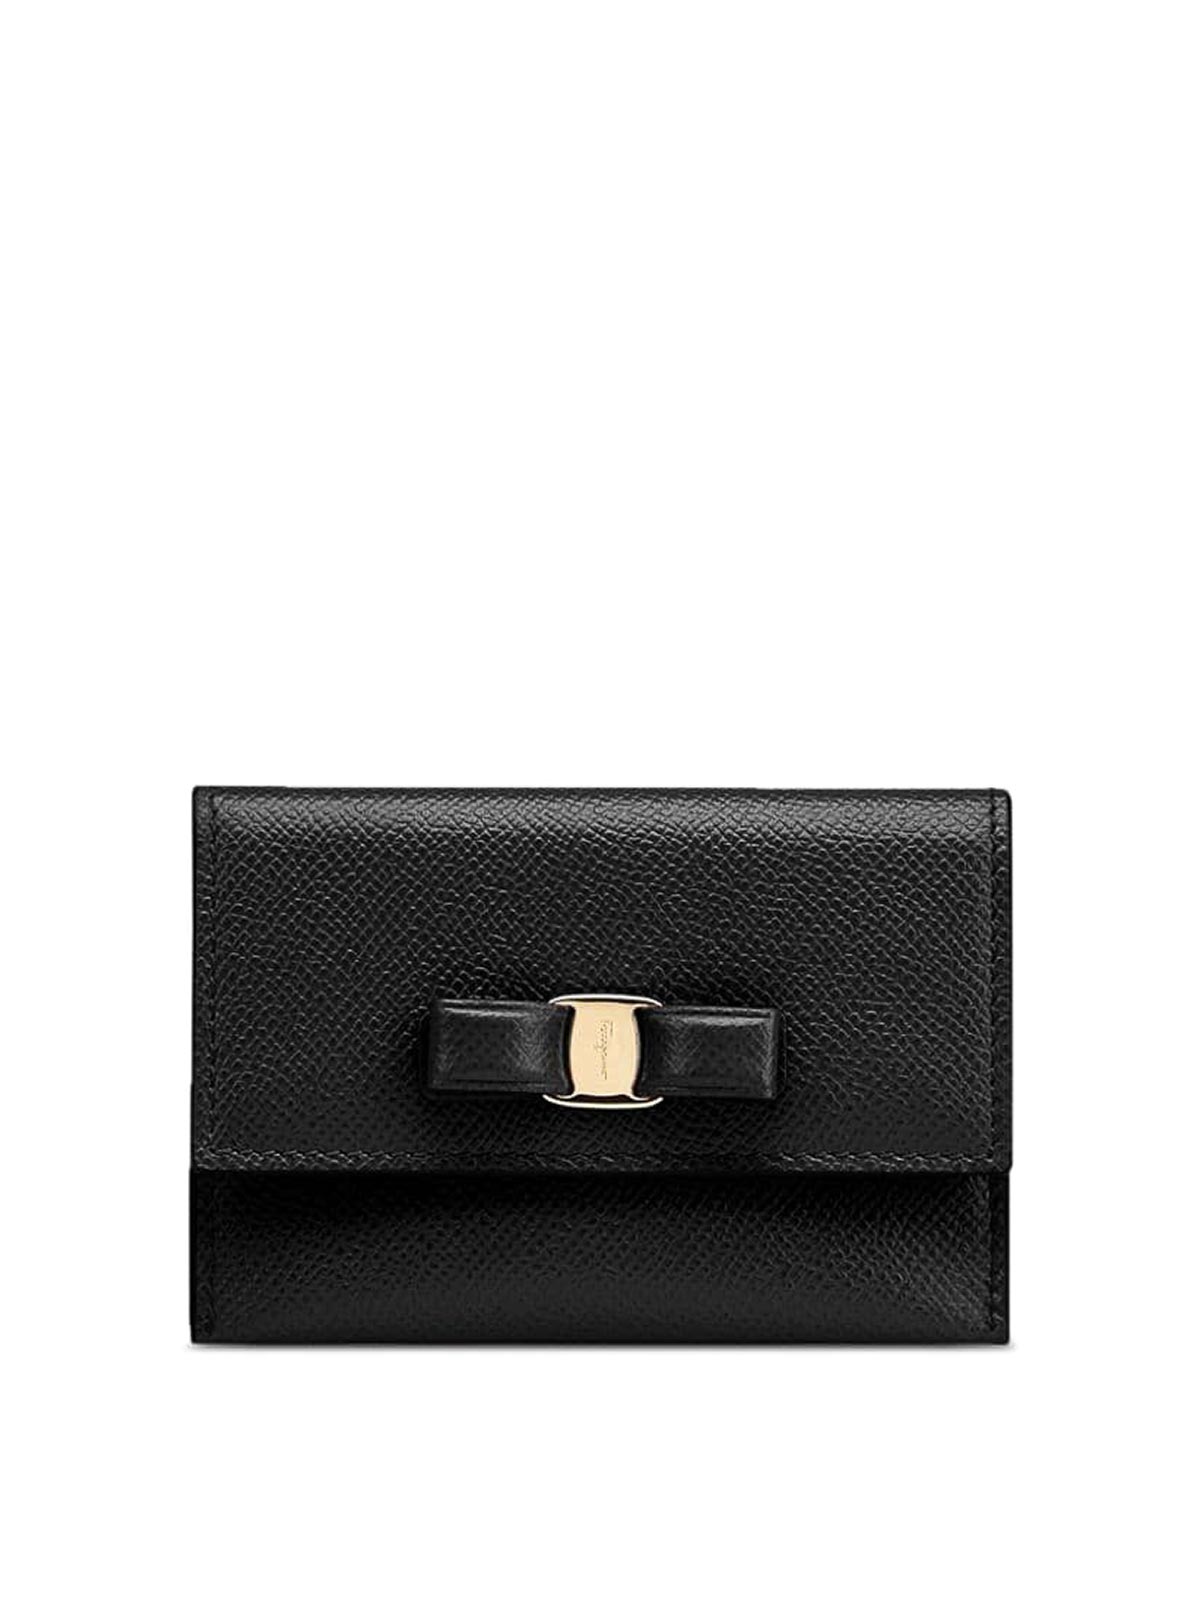 Ferragamo Vara Leather Flap Wallet In Black